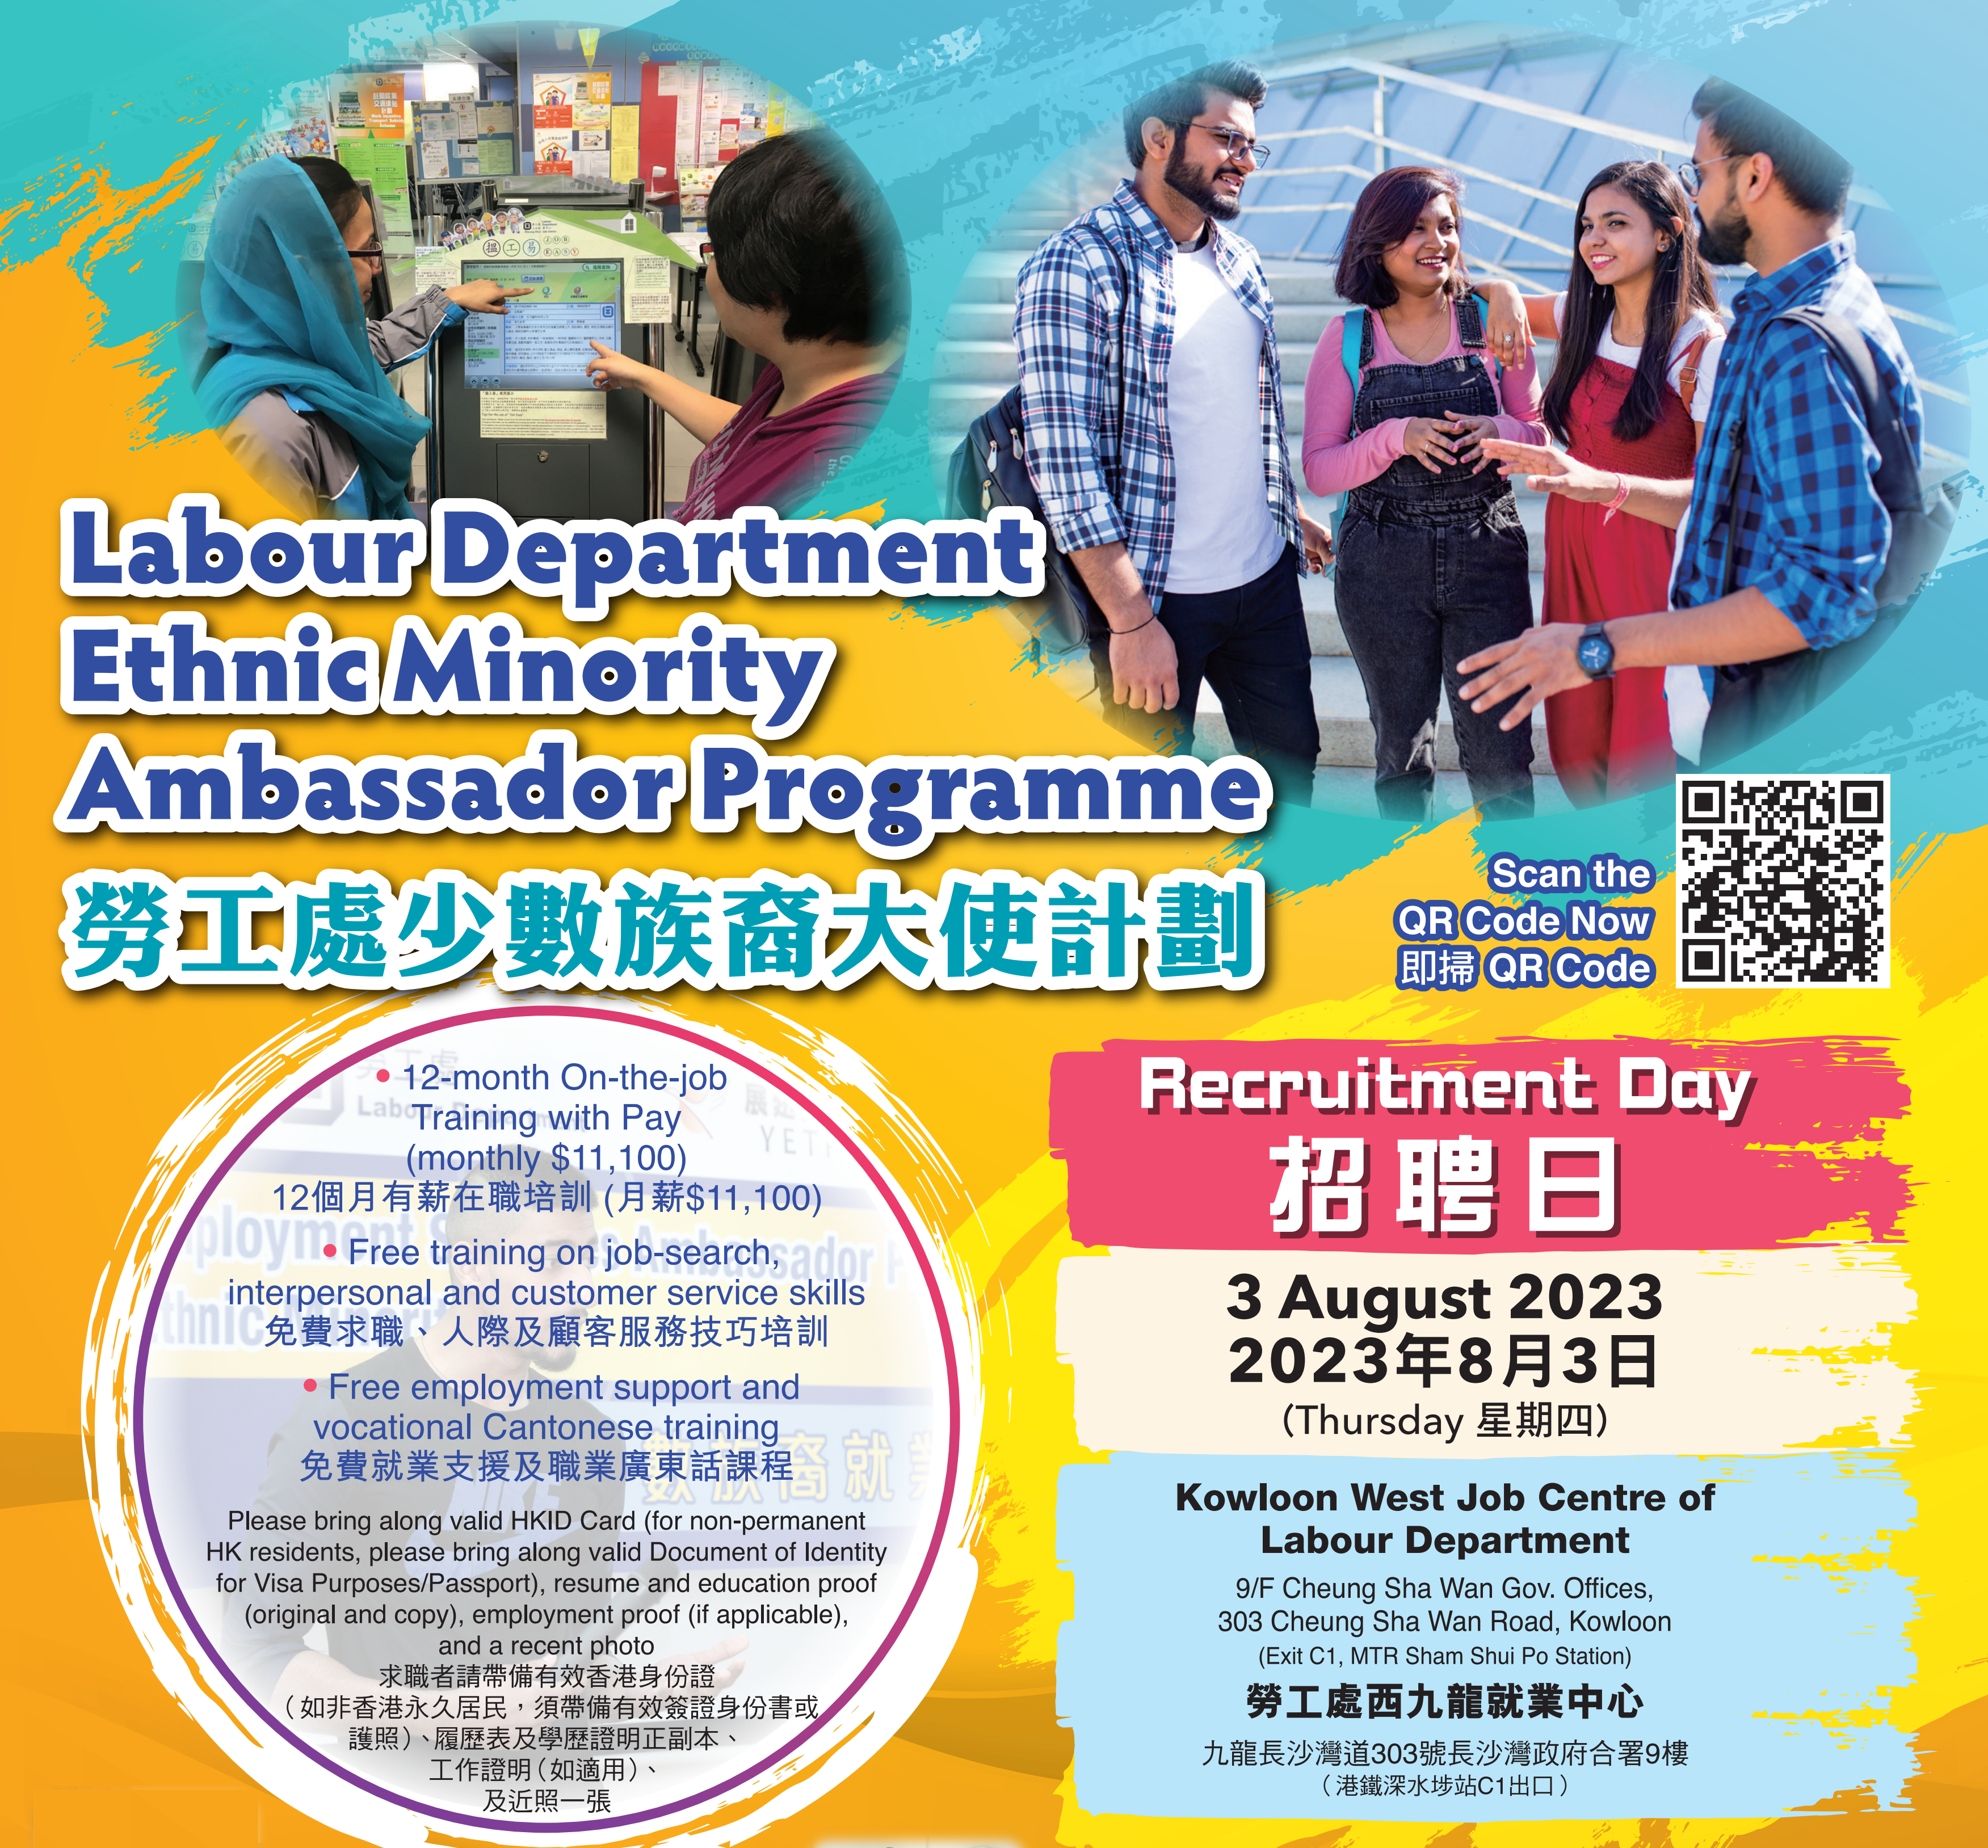 Labour Department Ethnic Minority Ambassador Programme opens for application